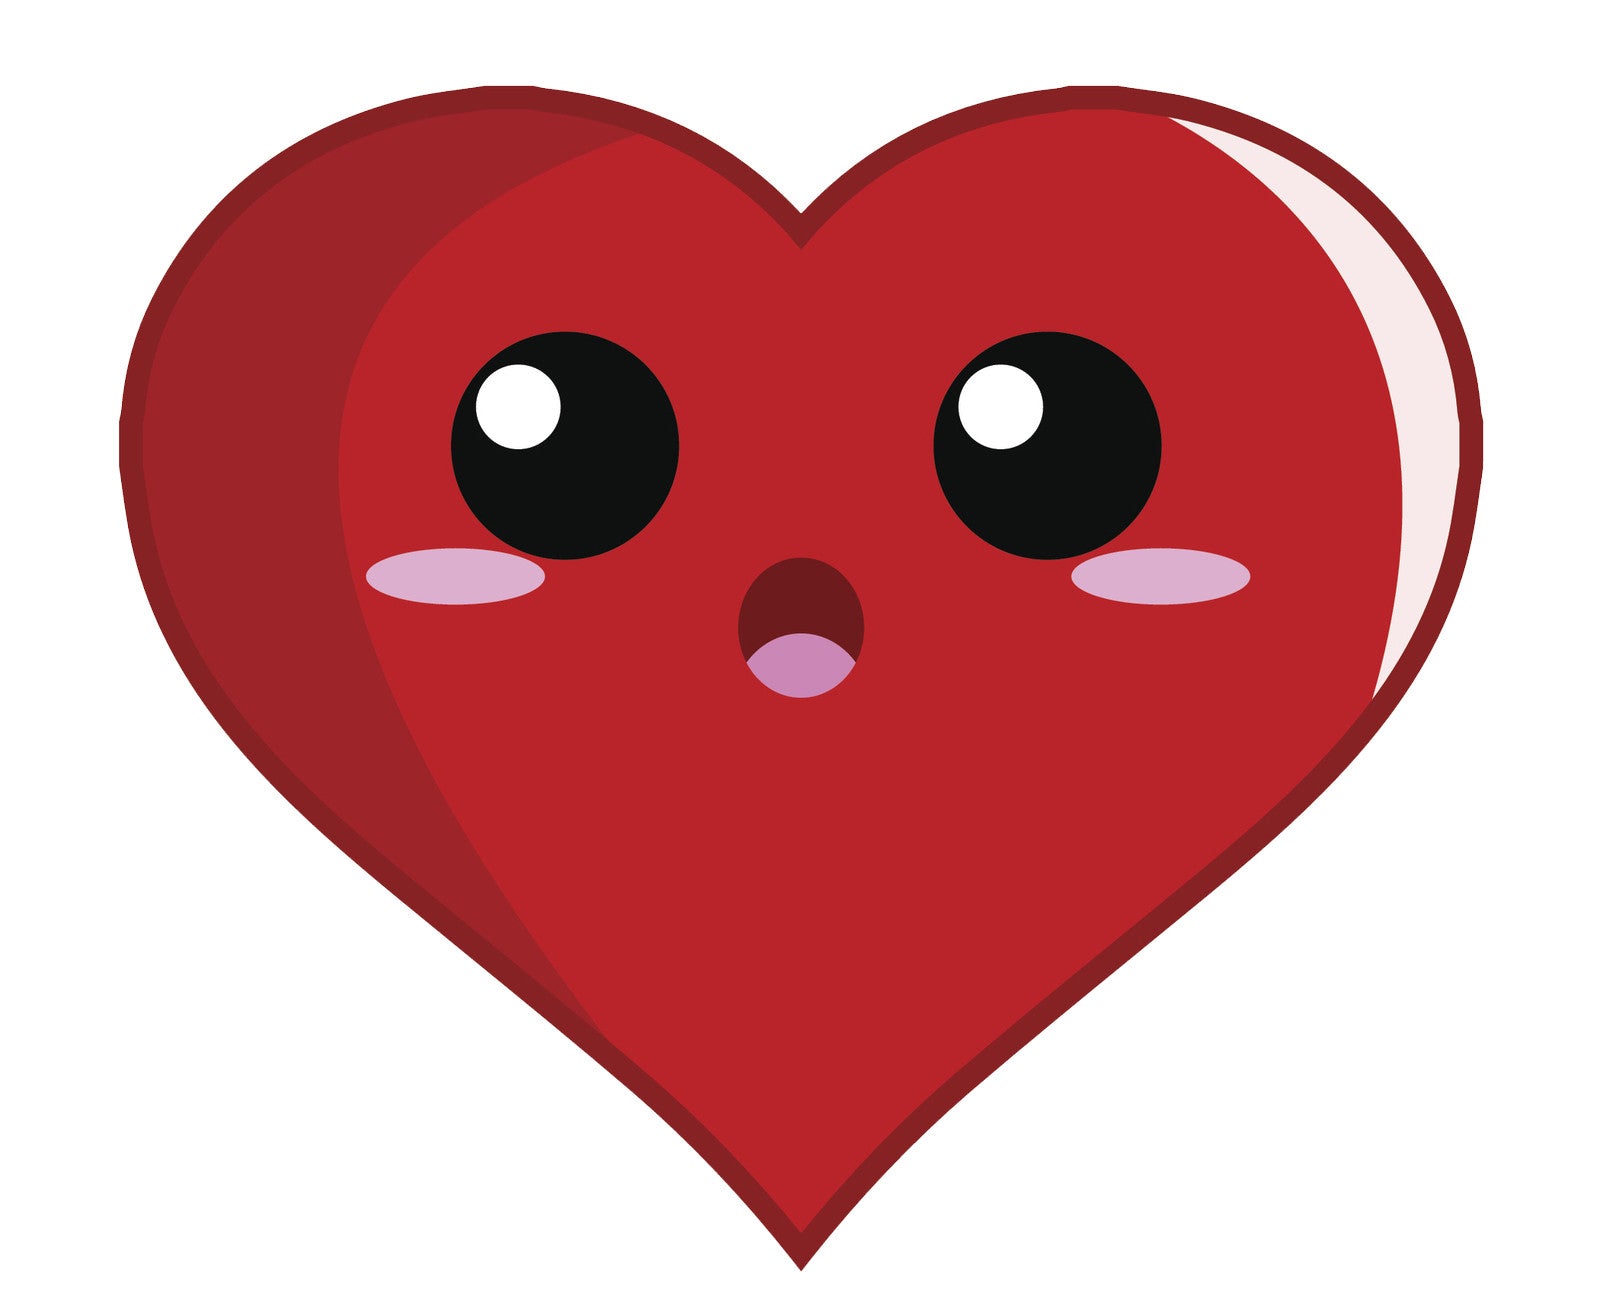 Adorable Red Heart Cartoon Emoji - Surprised Vinyl Decal Sticker